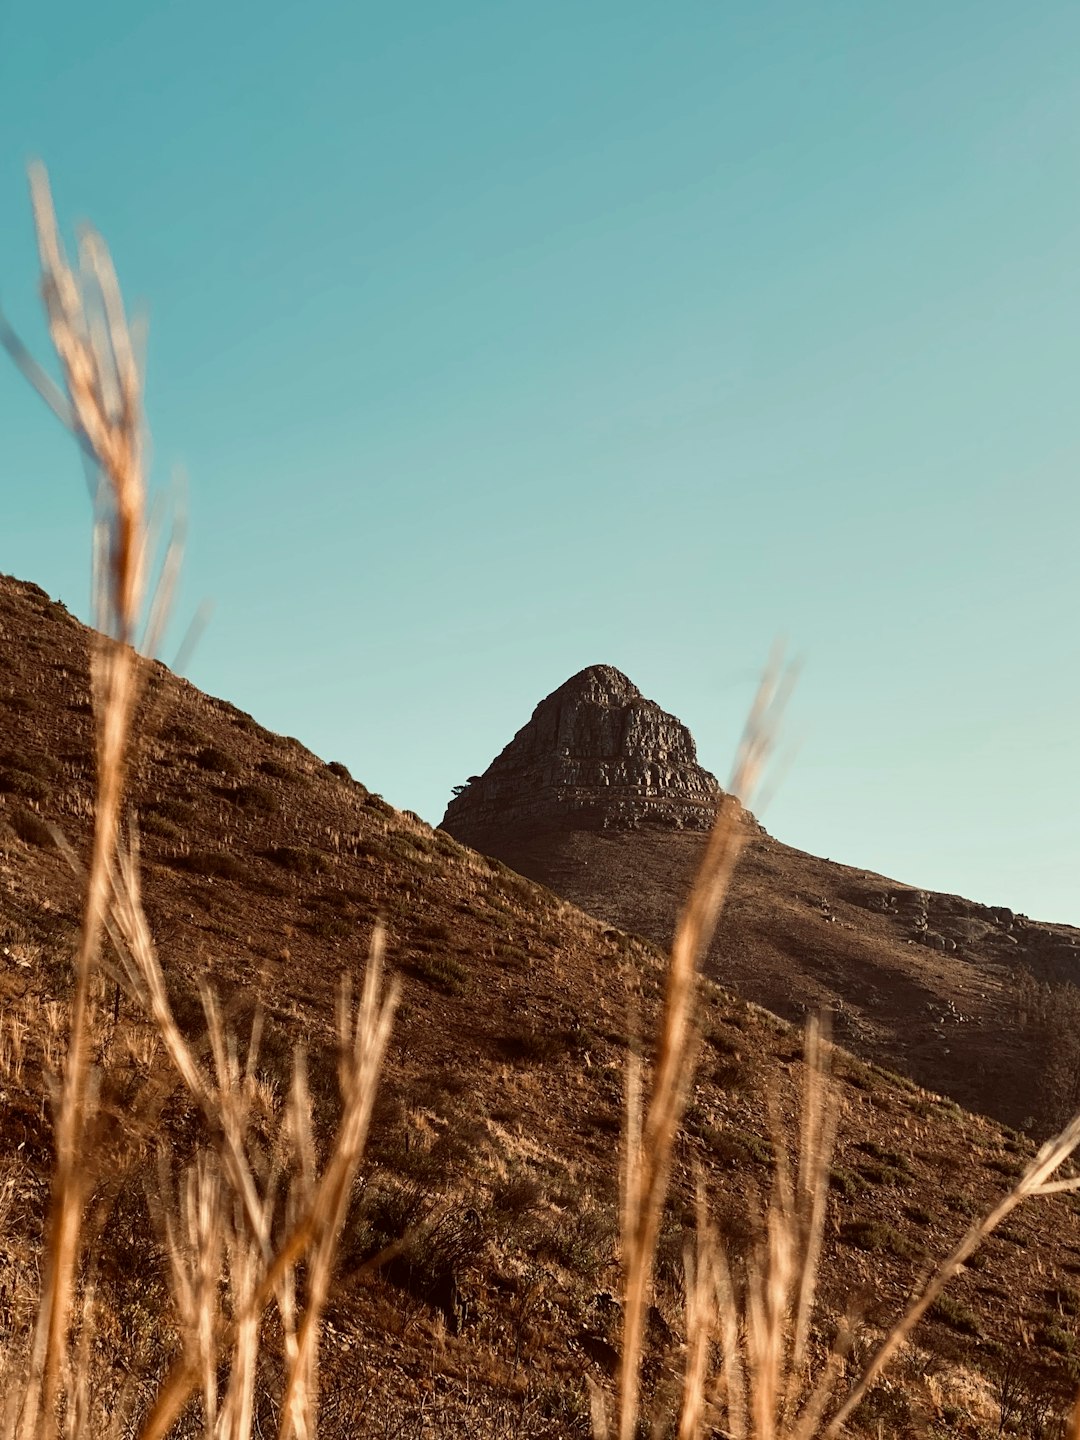 Hill photo spot Table Mountain National Park Lion's Head